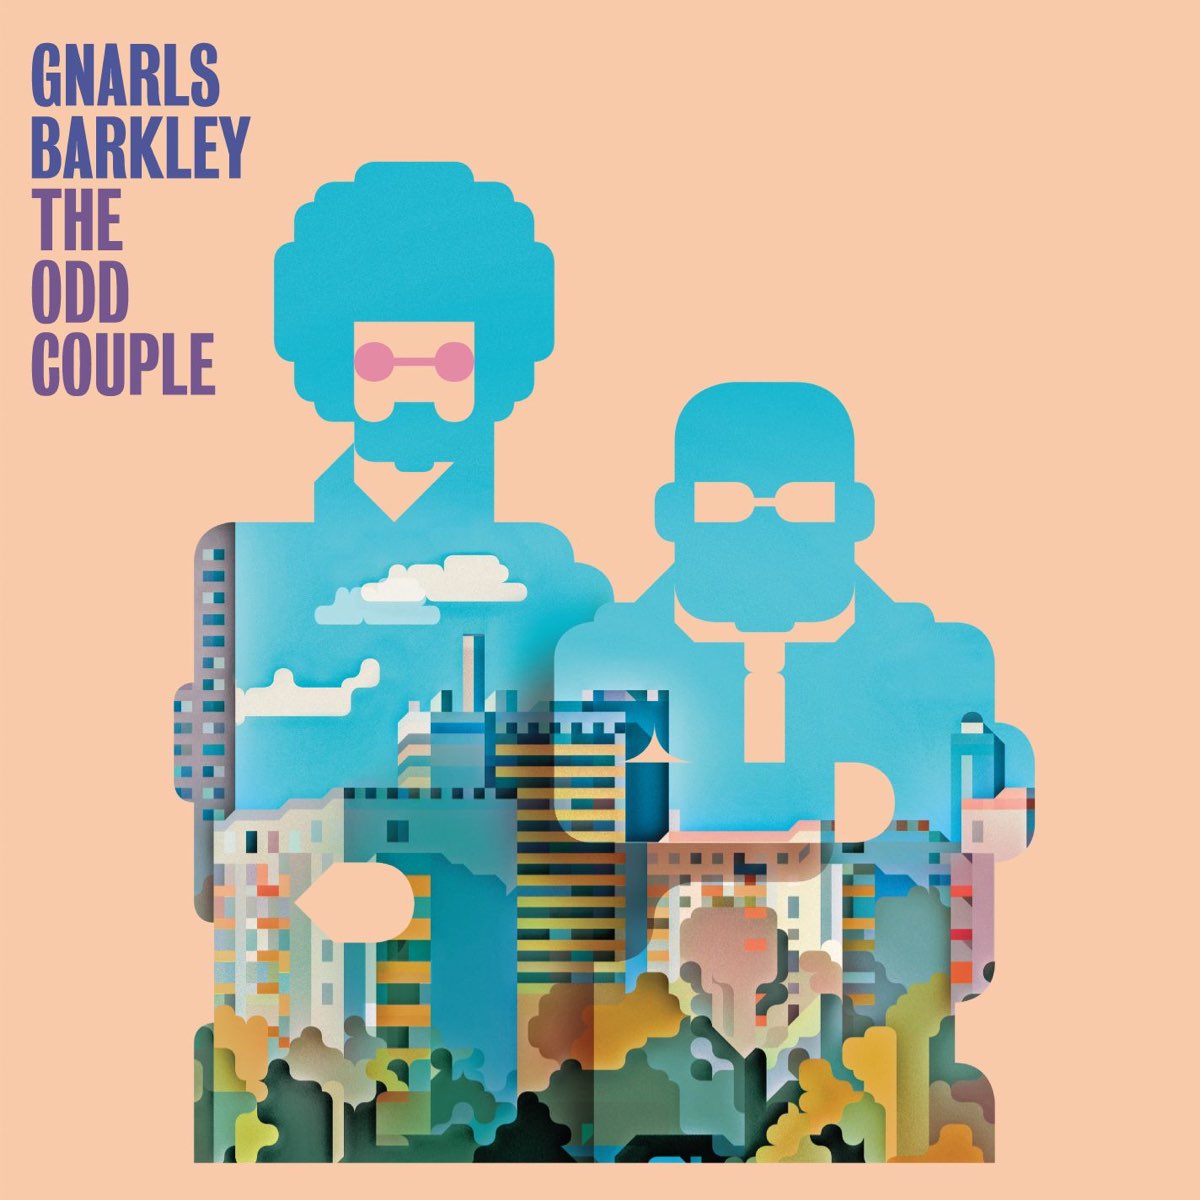 Gnarls Barkley The Odd Couple cover artwork